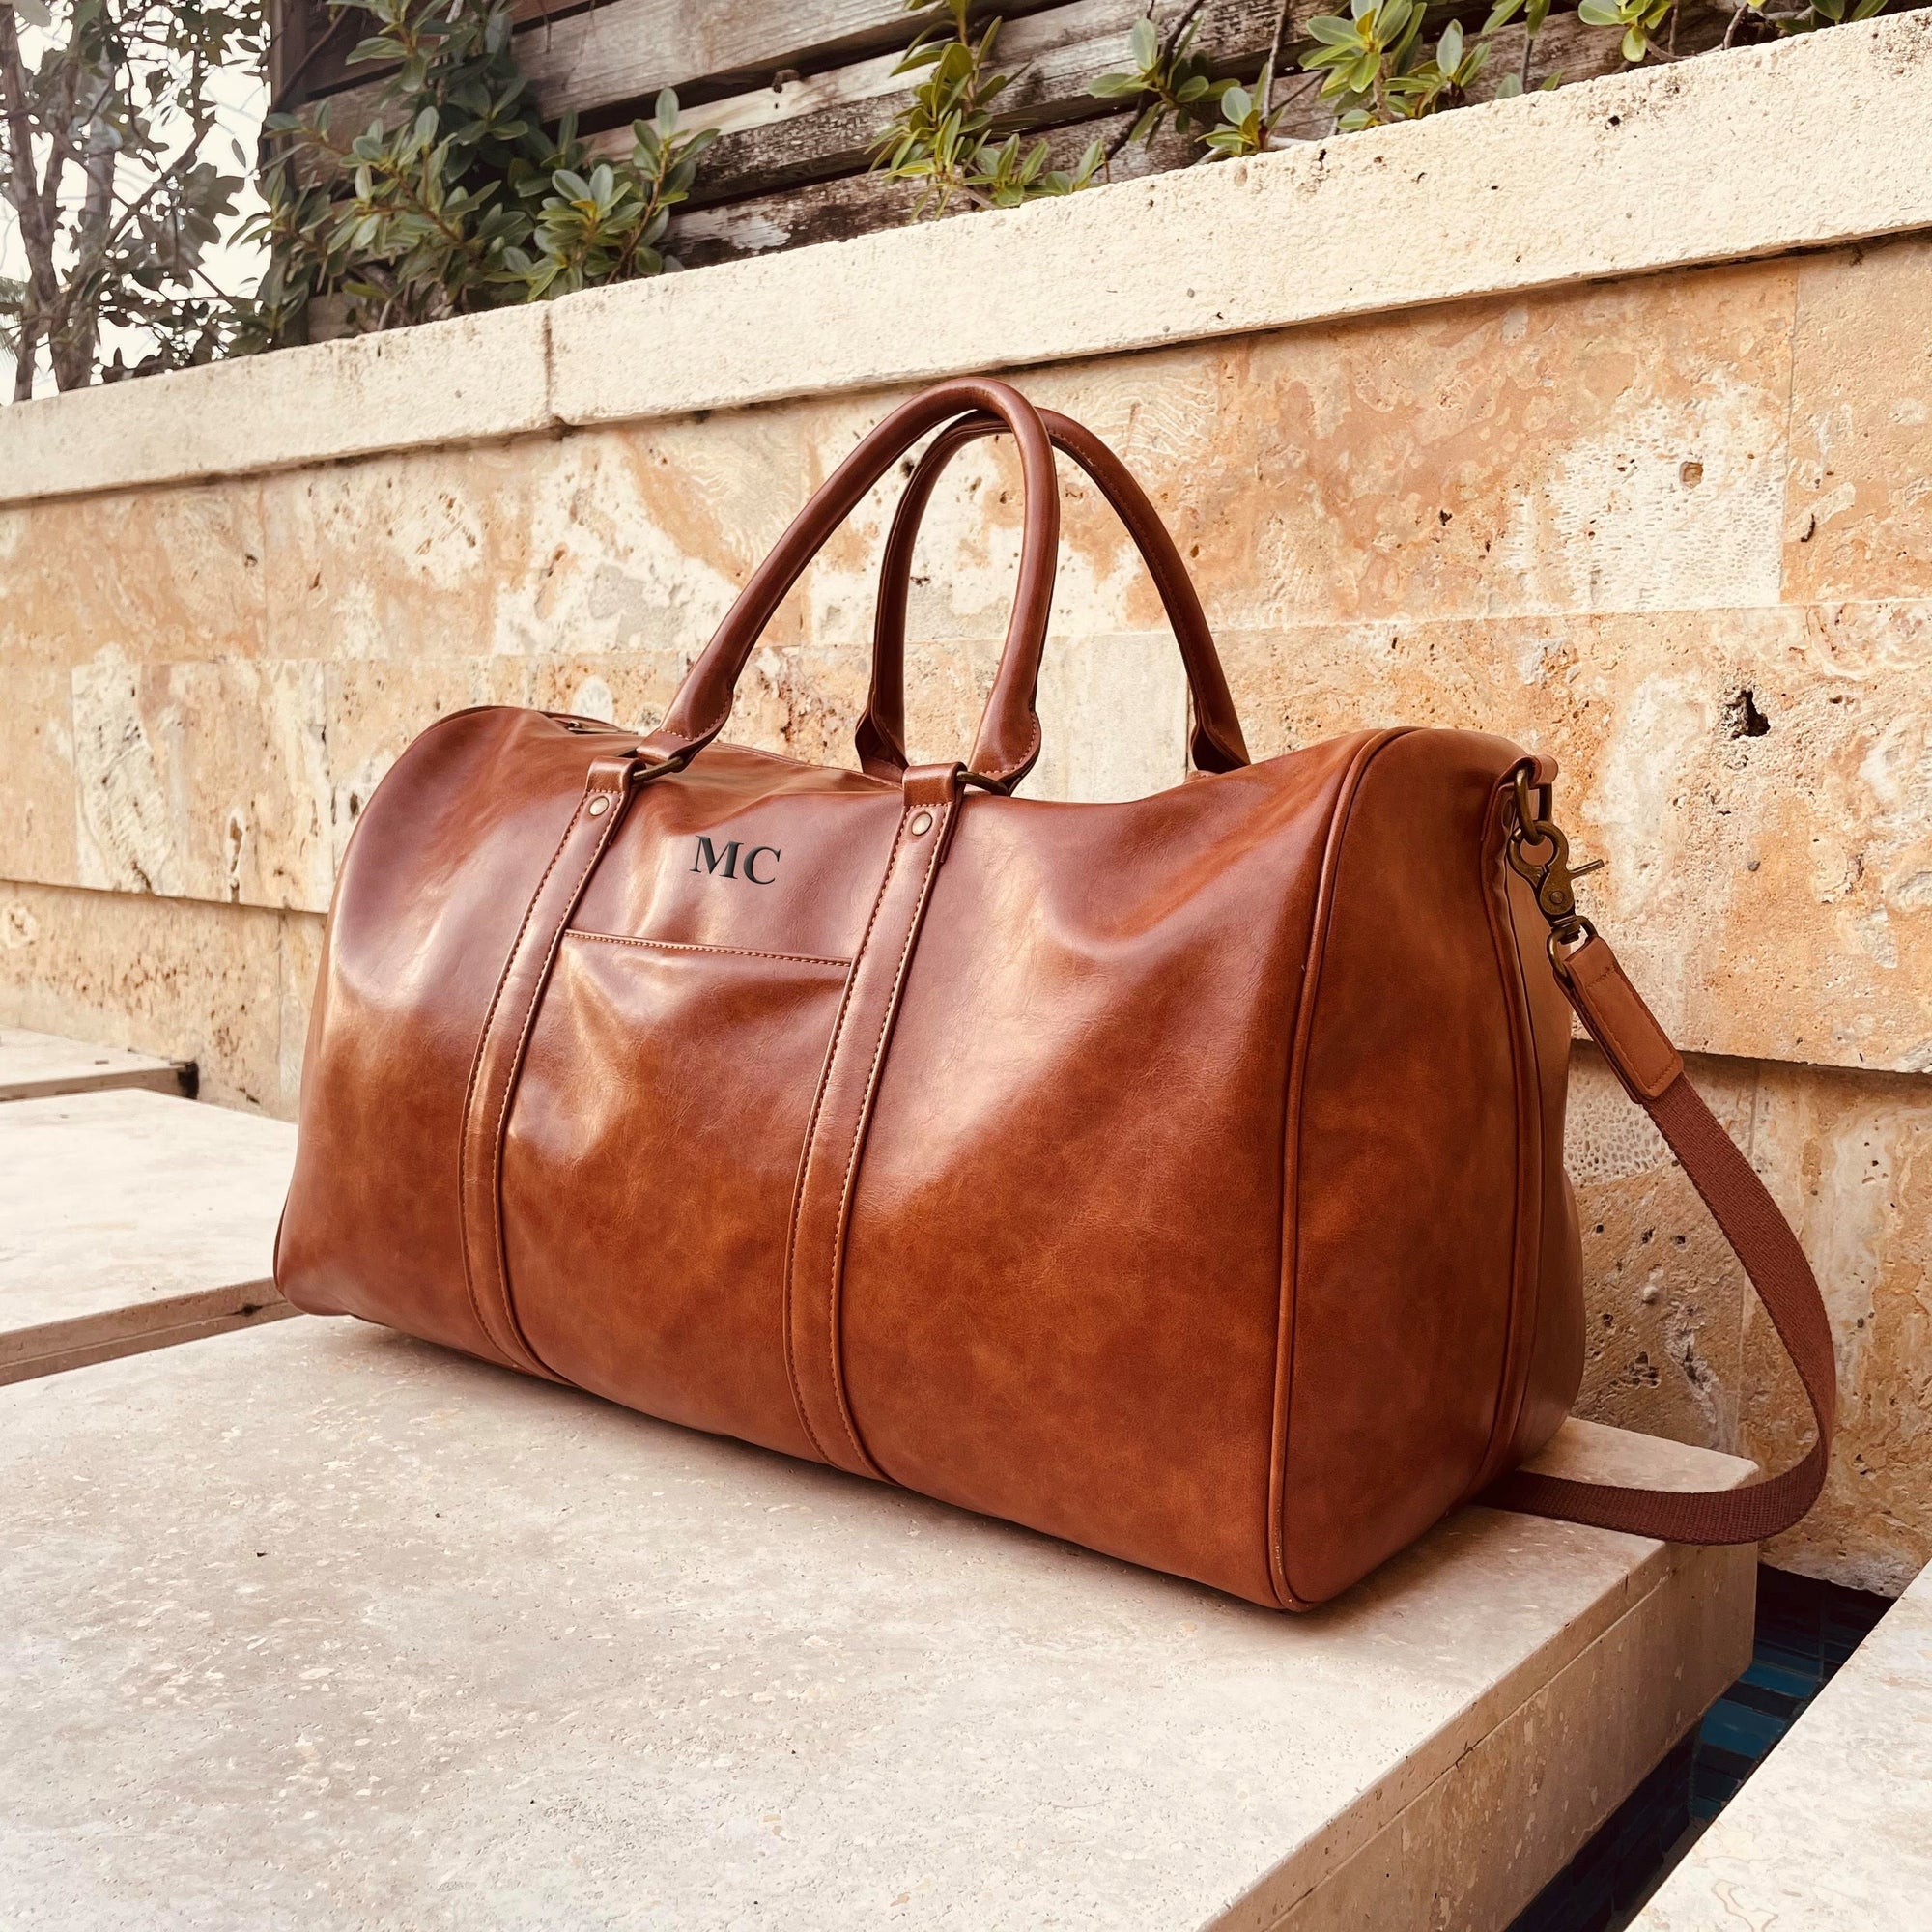 Personalized Duffle Bag for Men - Custom Weekender Bag - Groovy Guy Gifts